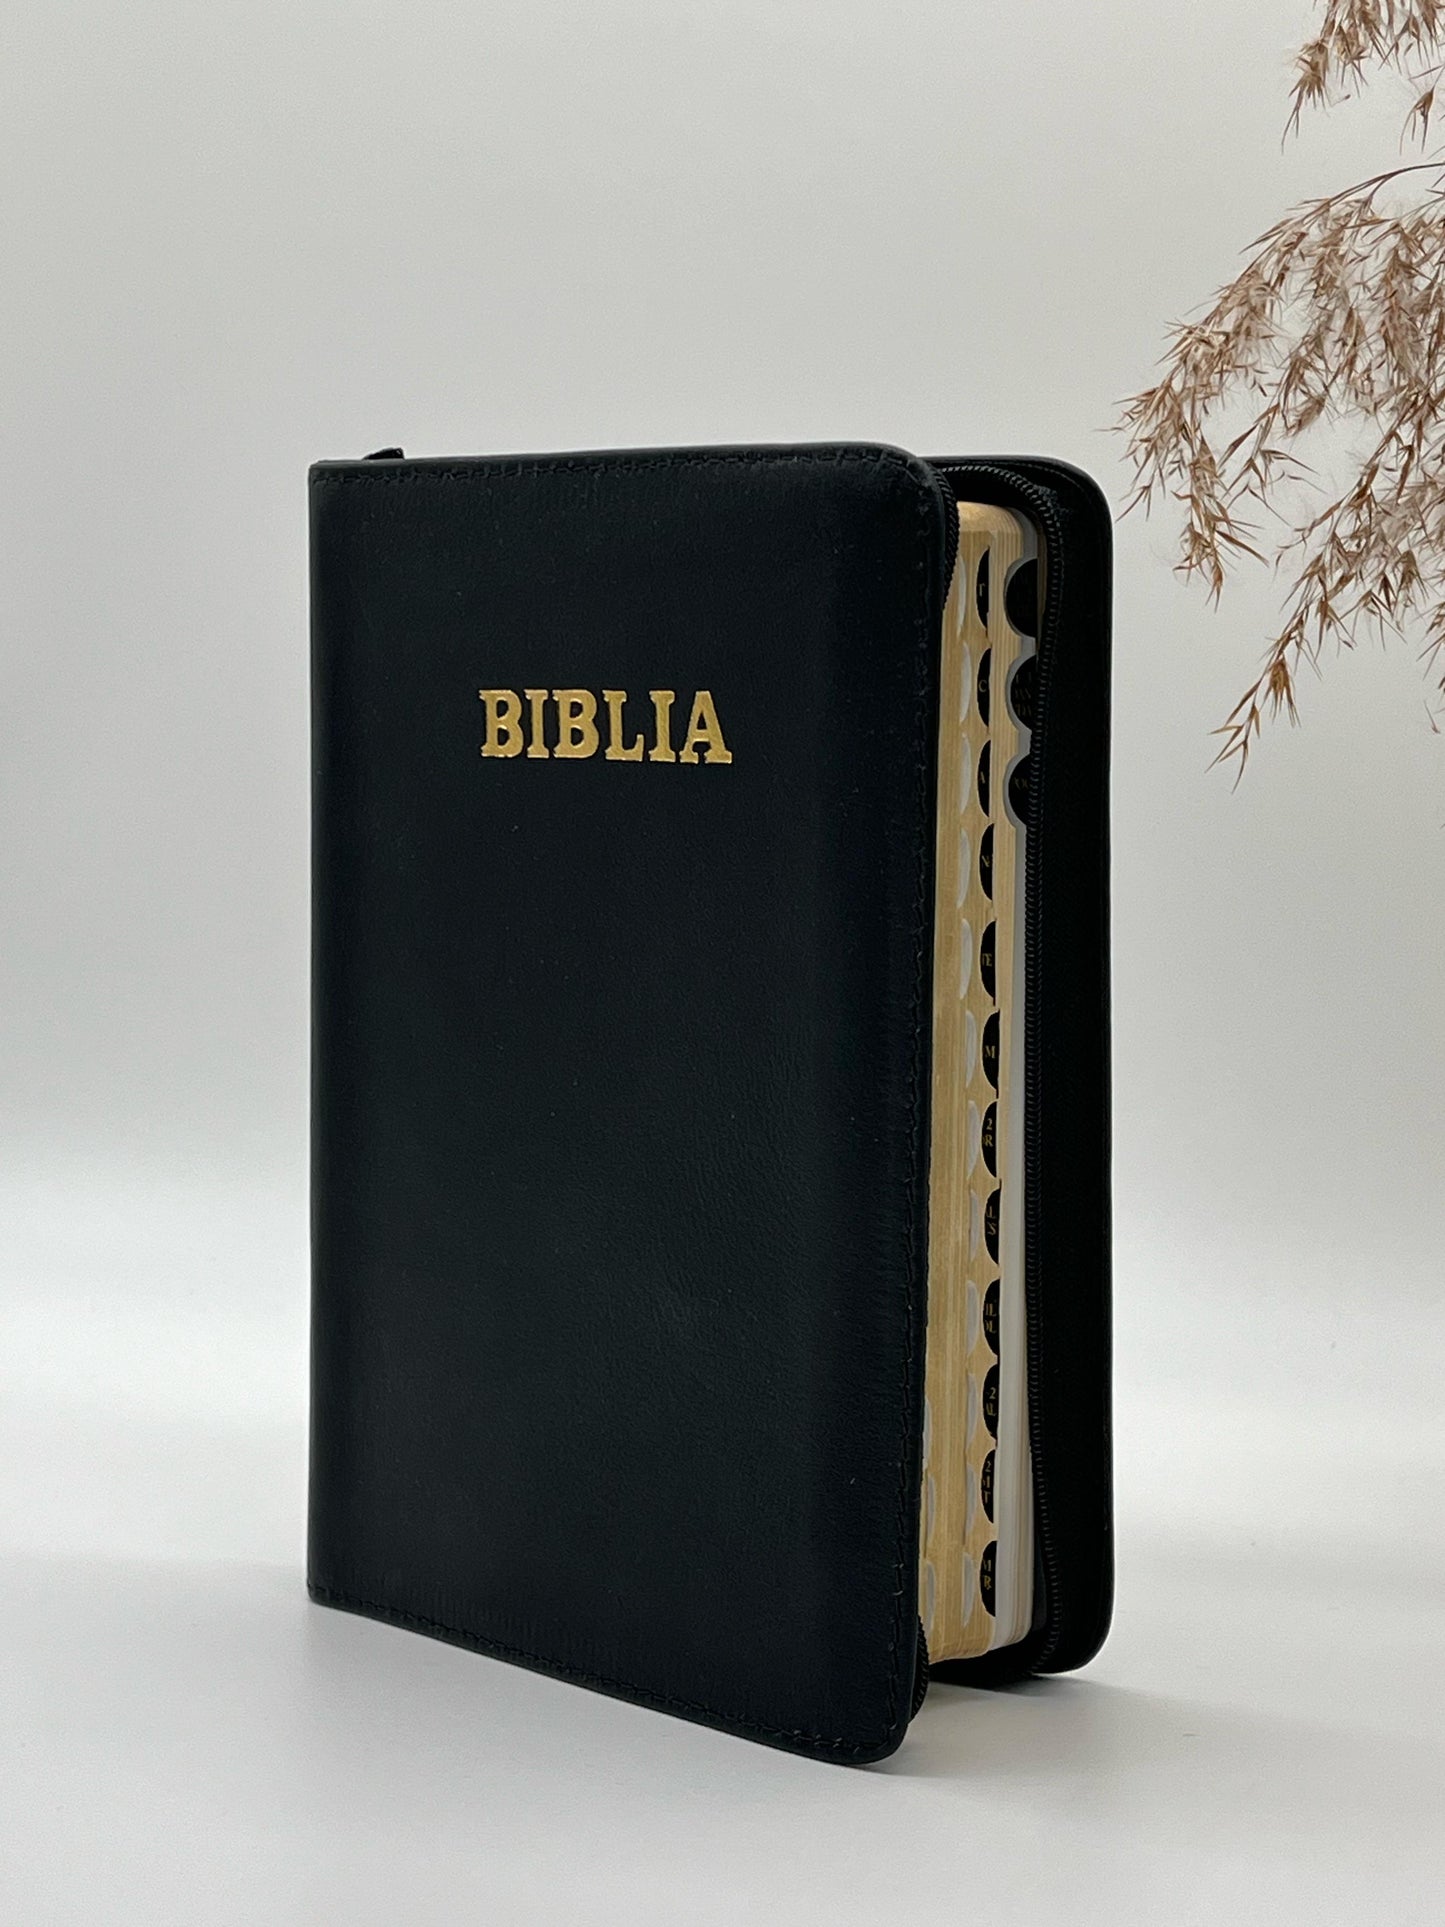 Biblia SBR 057 ZTI